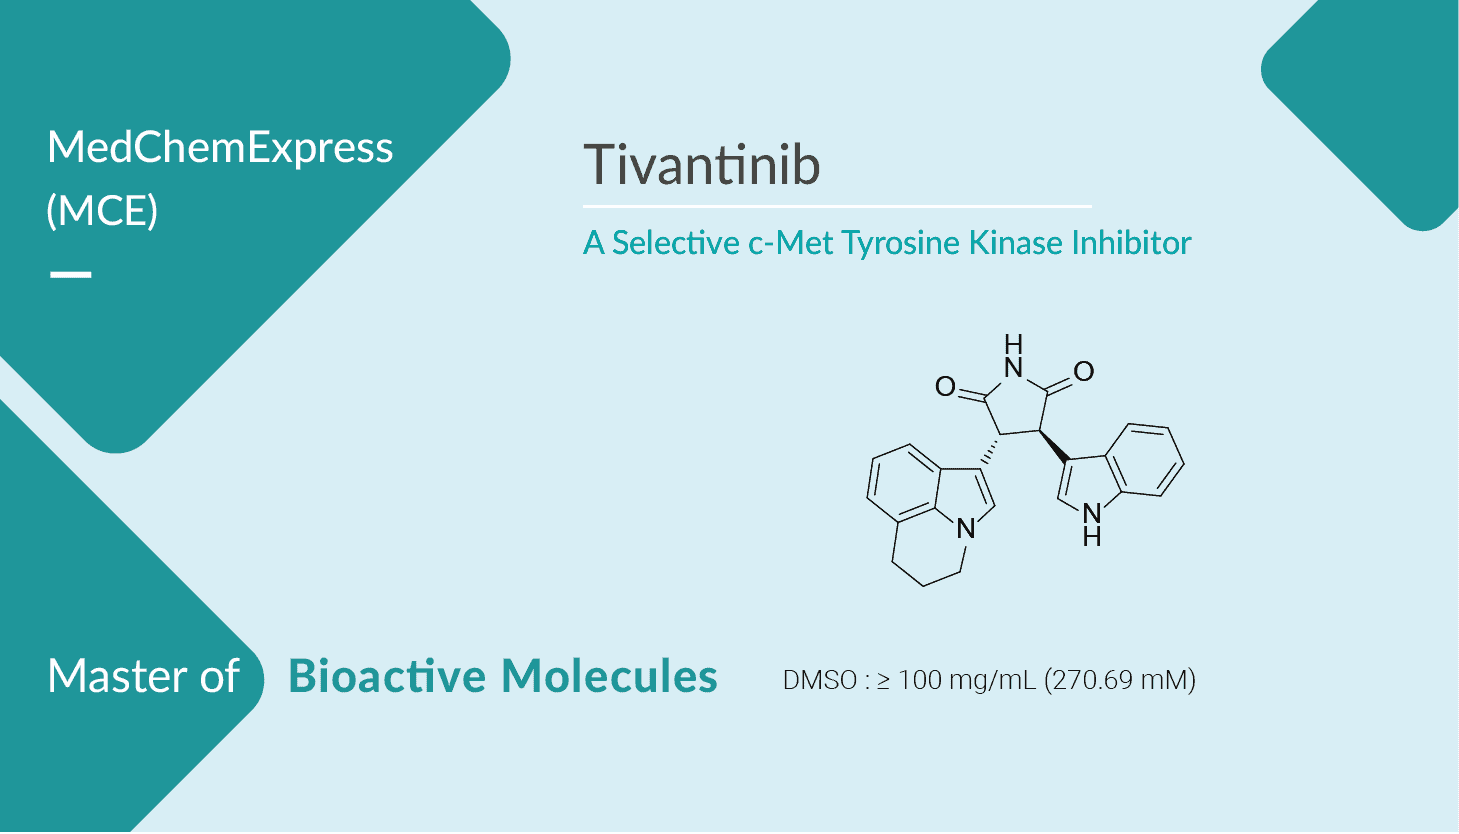 Tivantinib is a Selective c-Met Tyrosine Kinase Inhibitor